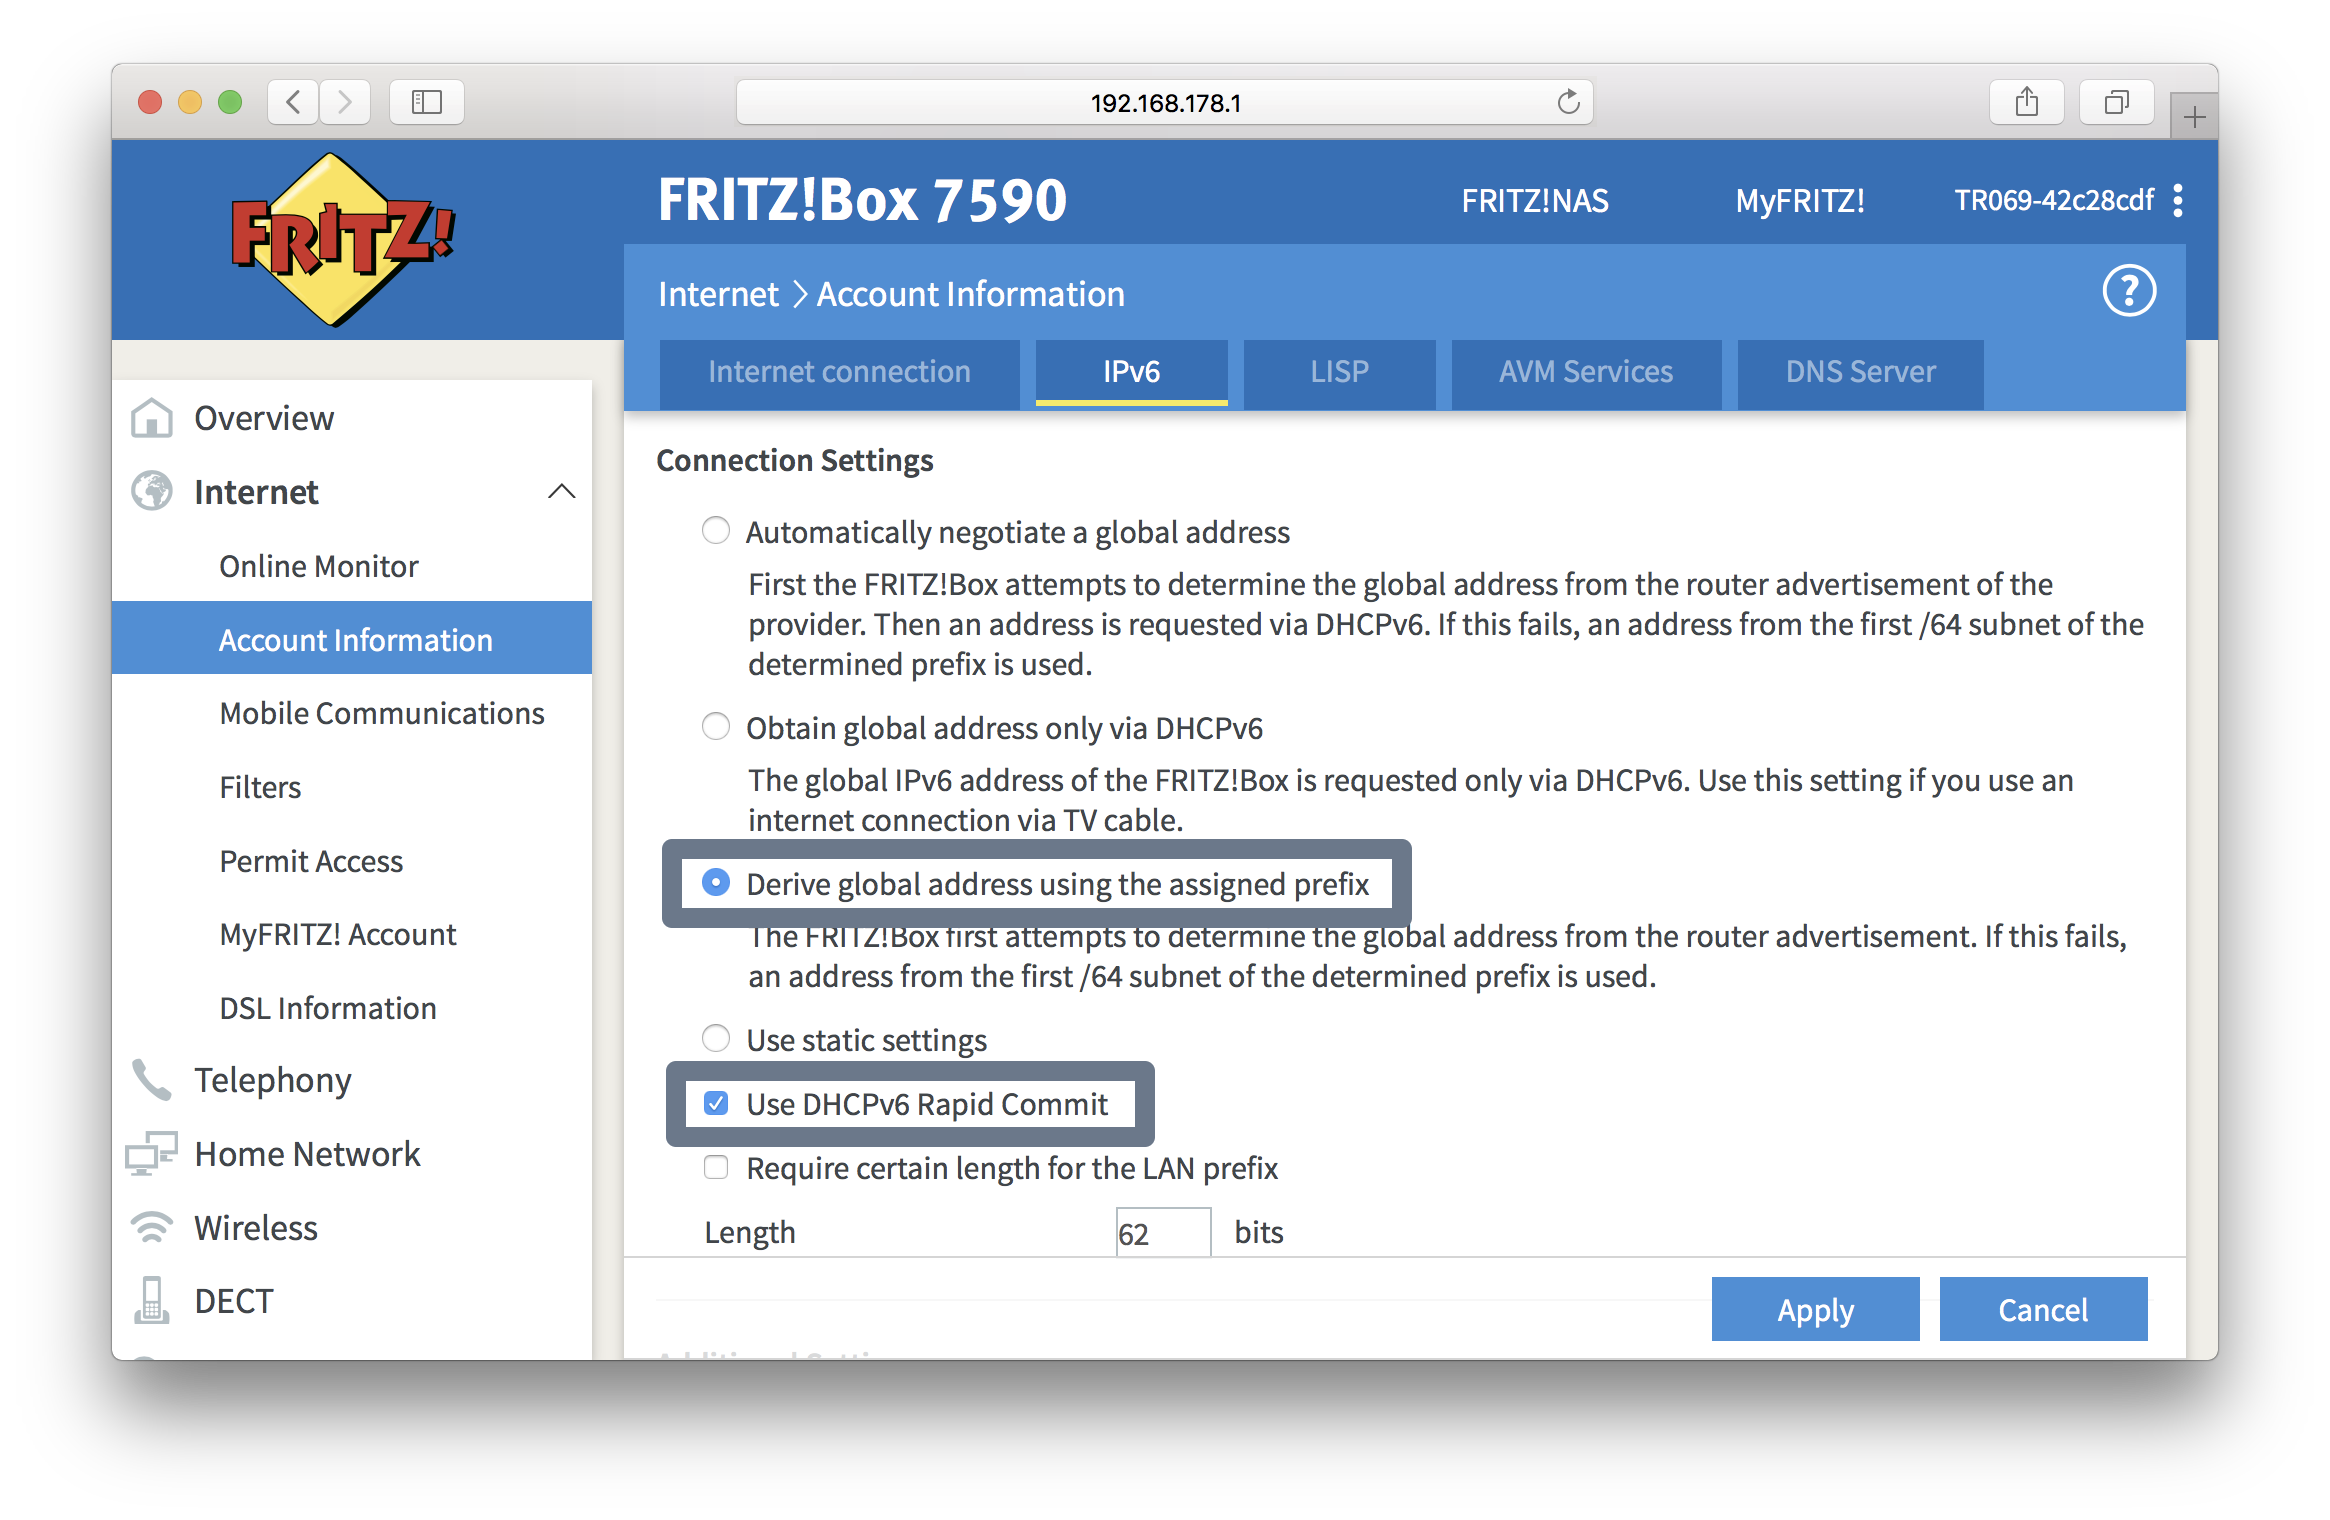 How do I enable IPv6 on my FRITZ!Box